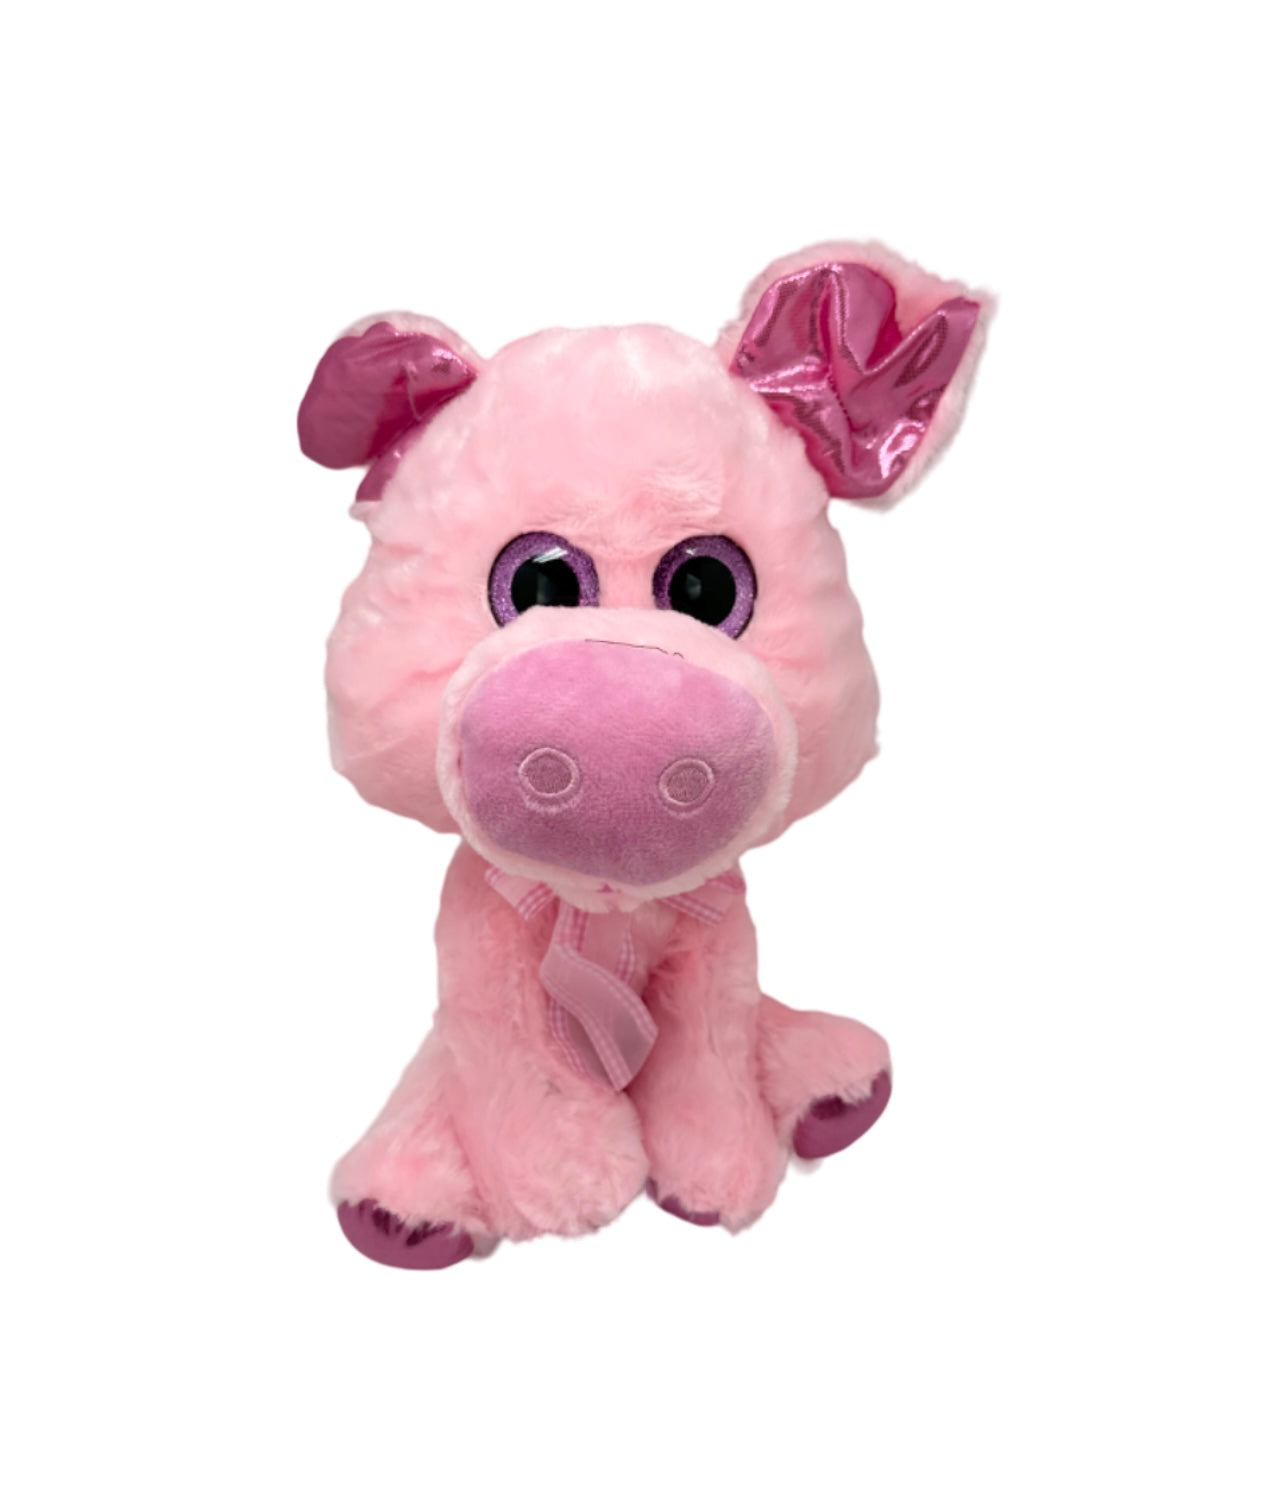 5" Pink Pig